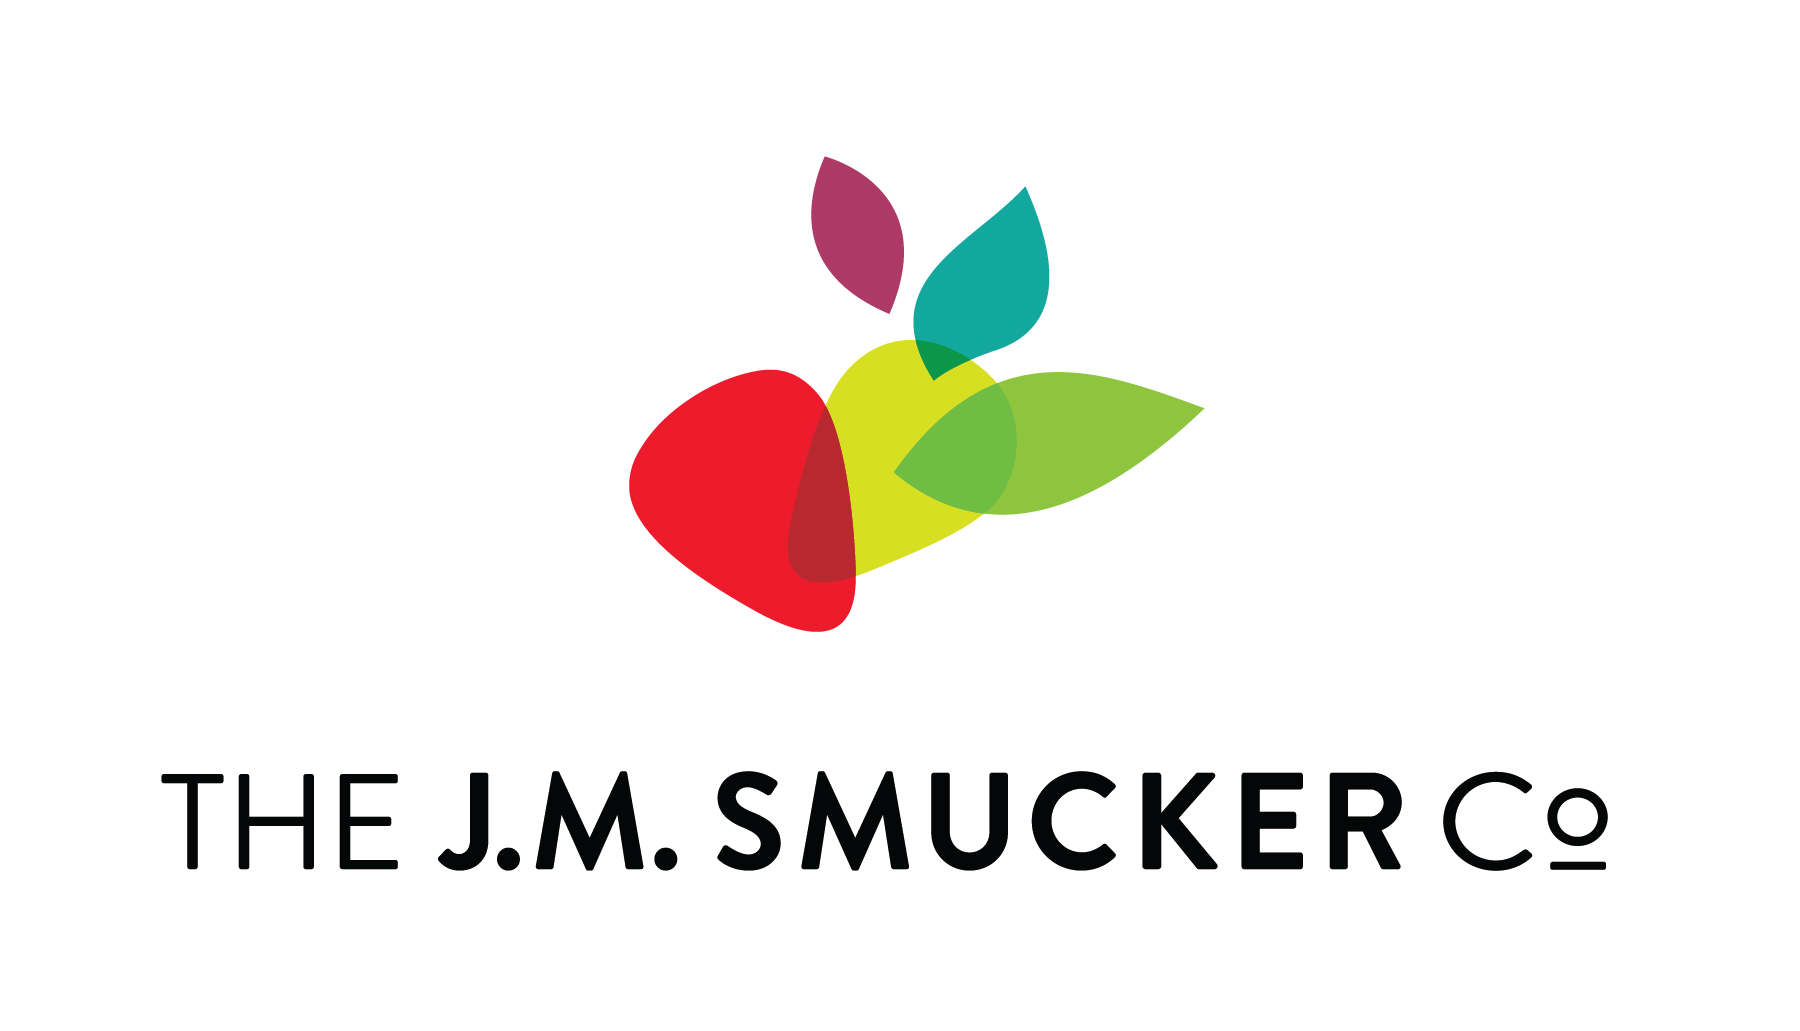 J.M. Smucker